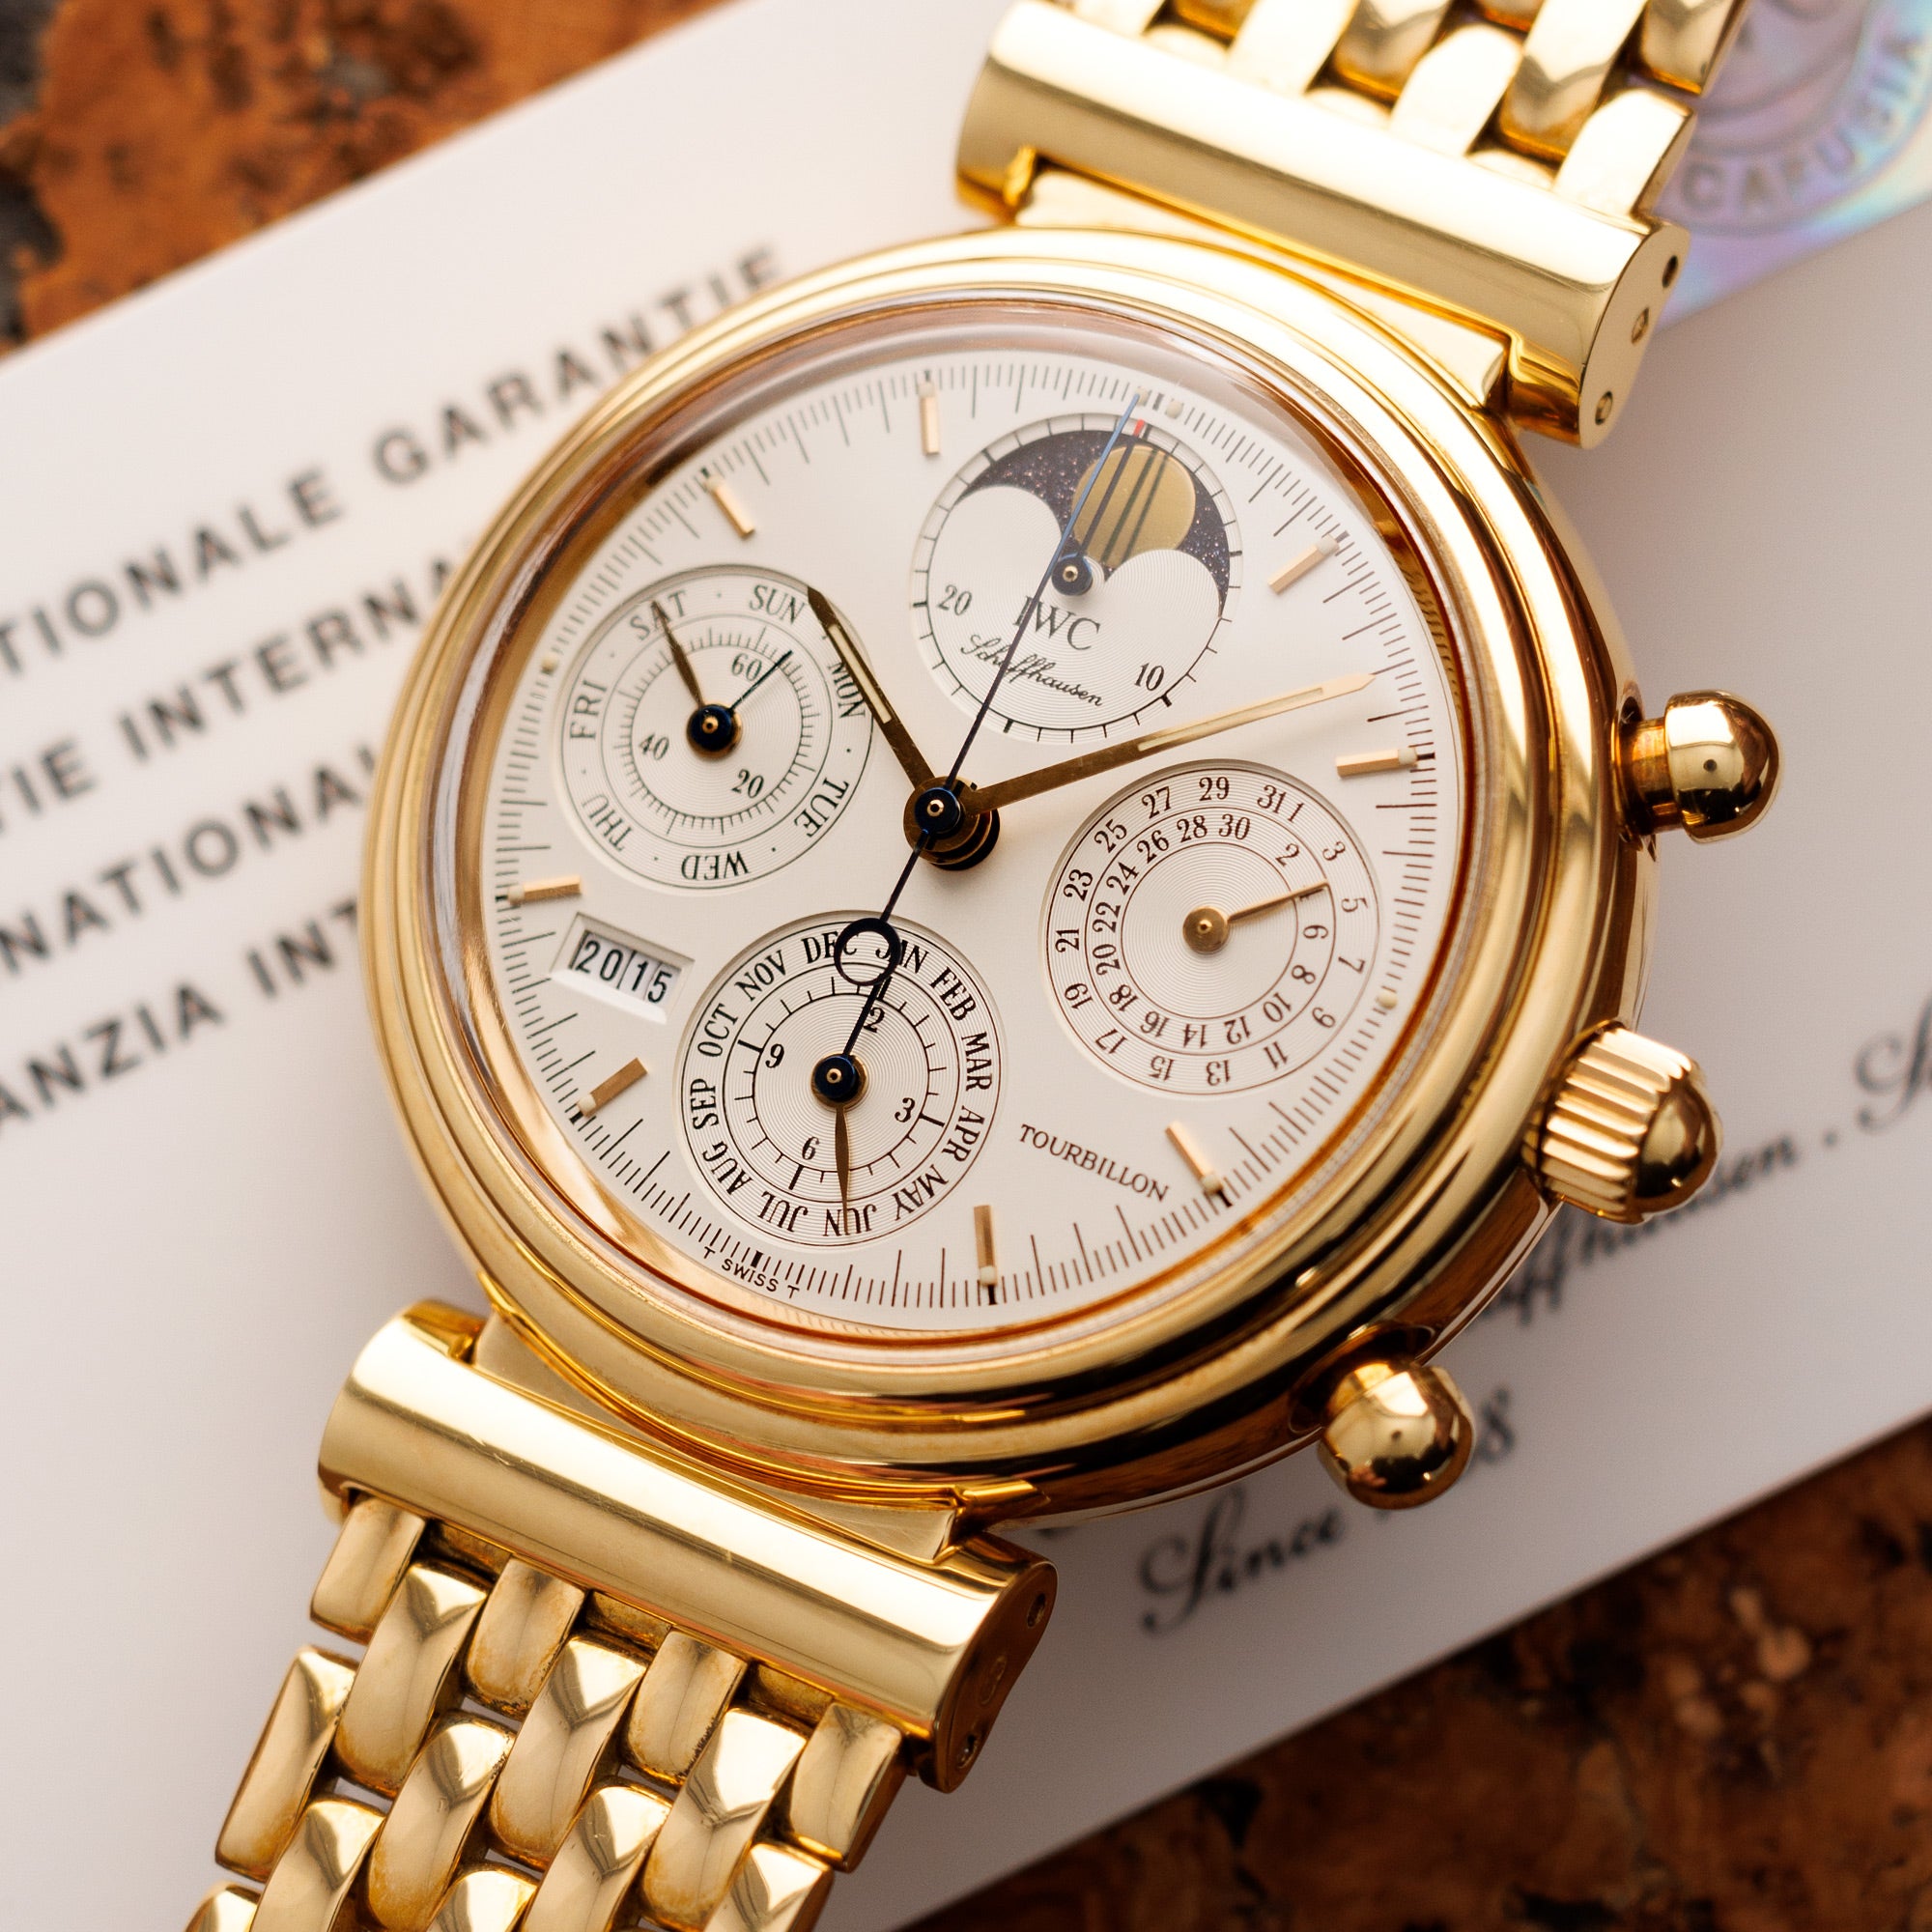 IWC - IWC Yellow Gold Perpetual Calendar Tourbillon Da Vinci Ref. 3752 - The Keystone Watches